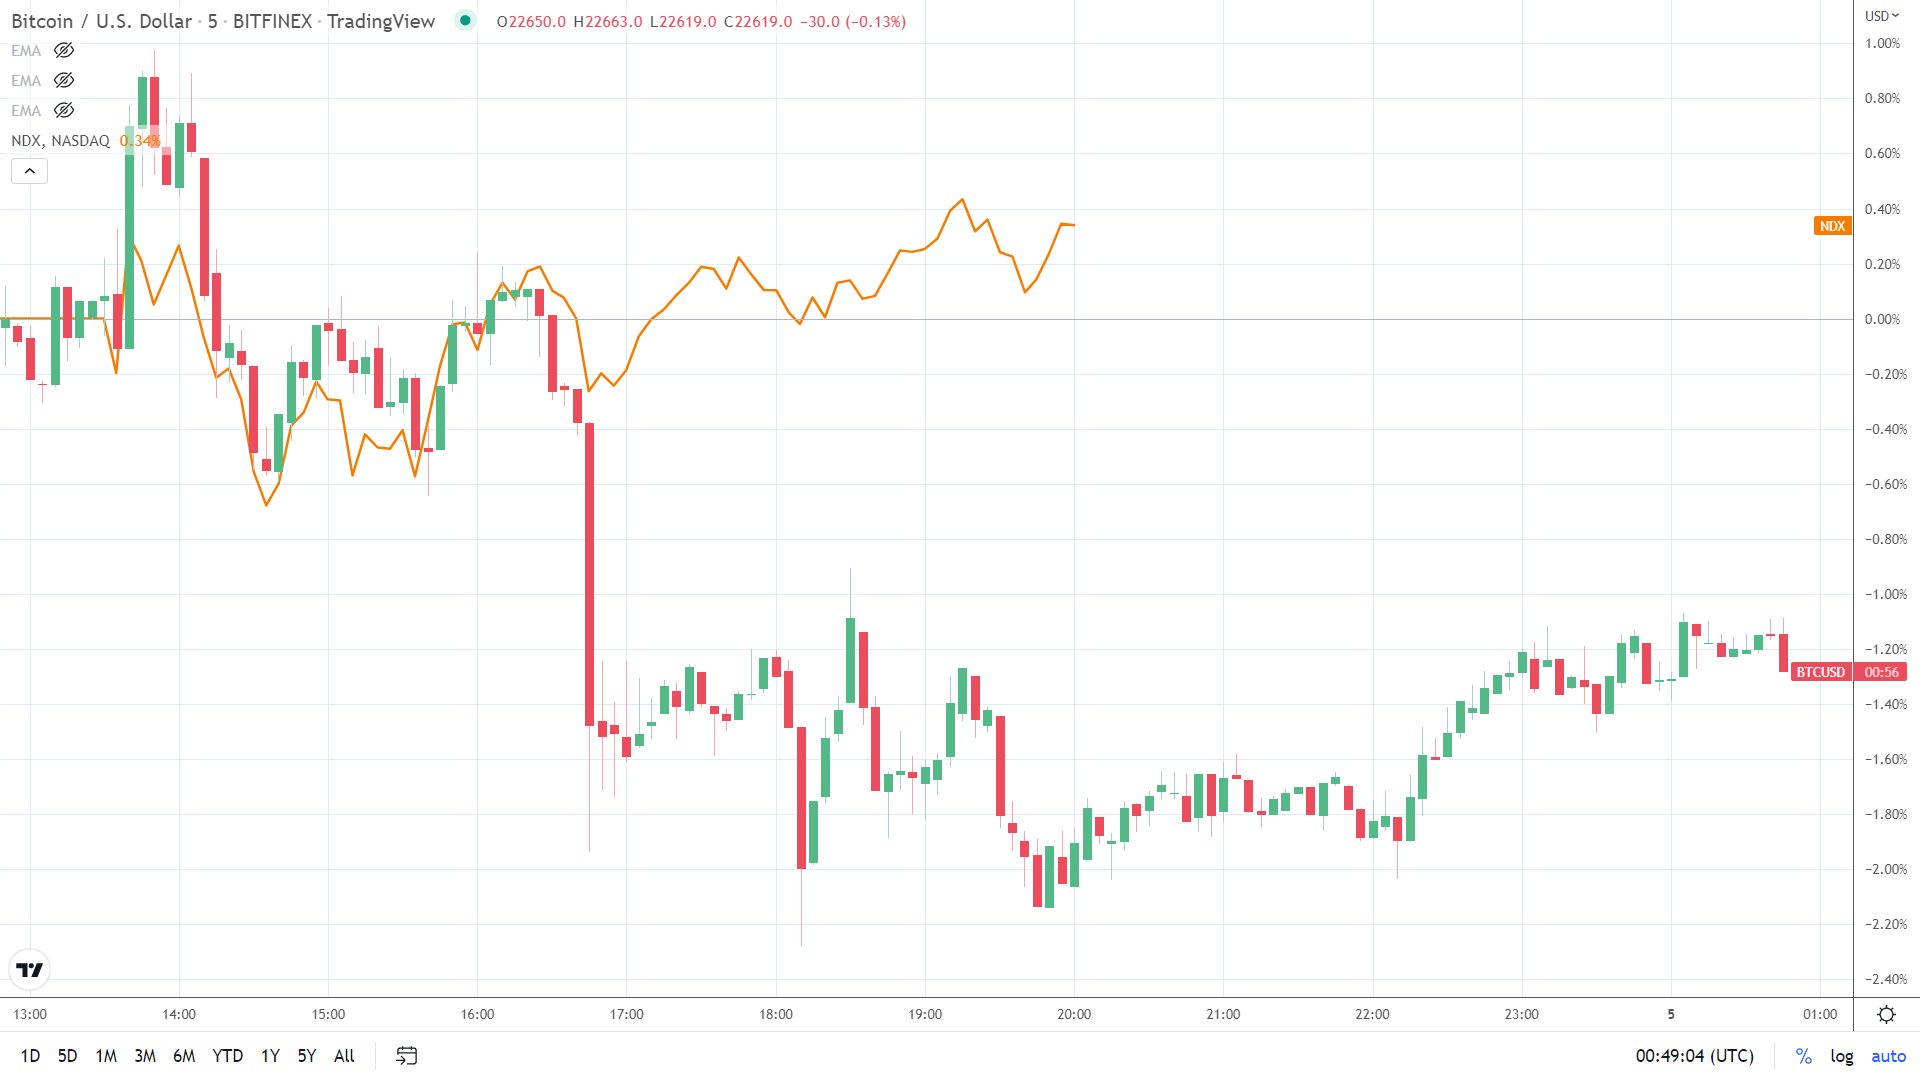 NASDAQ correlation